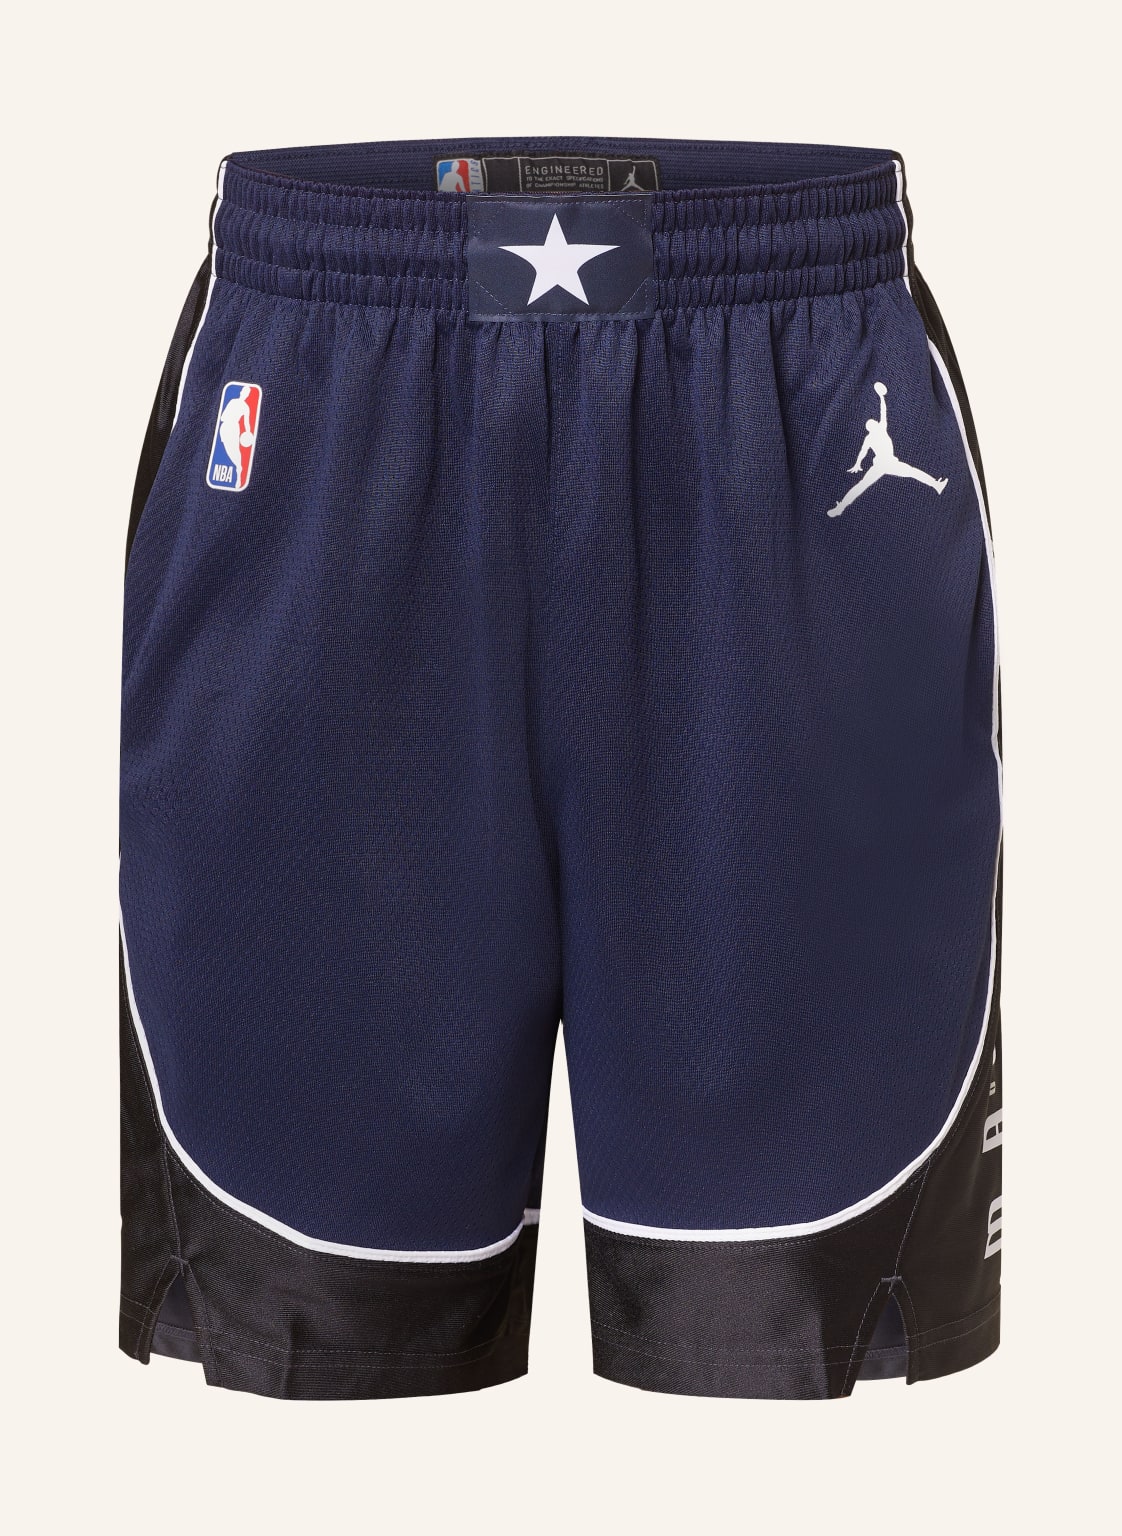 Jordan Basketballshorts blau von Jordan